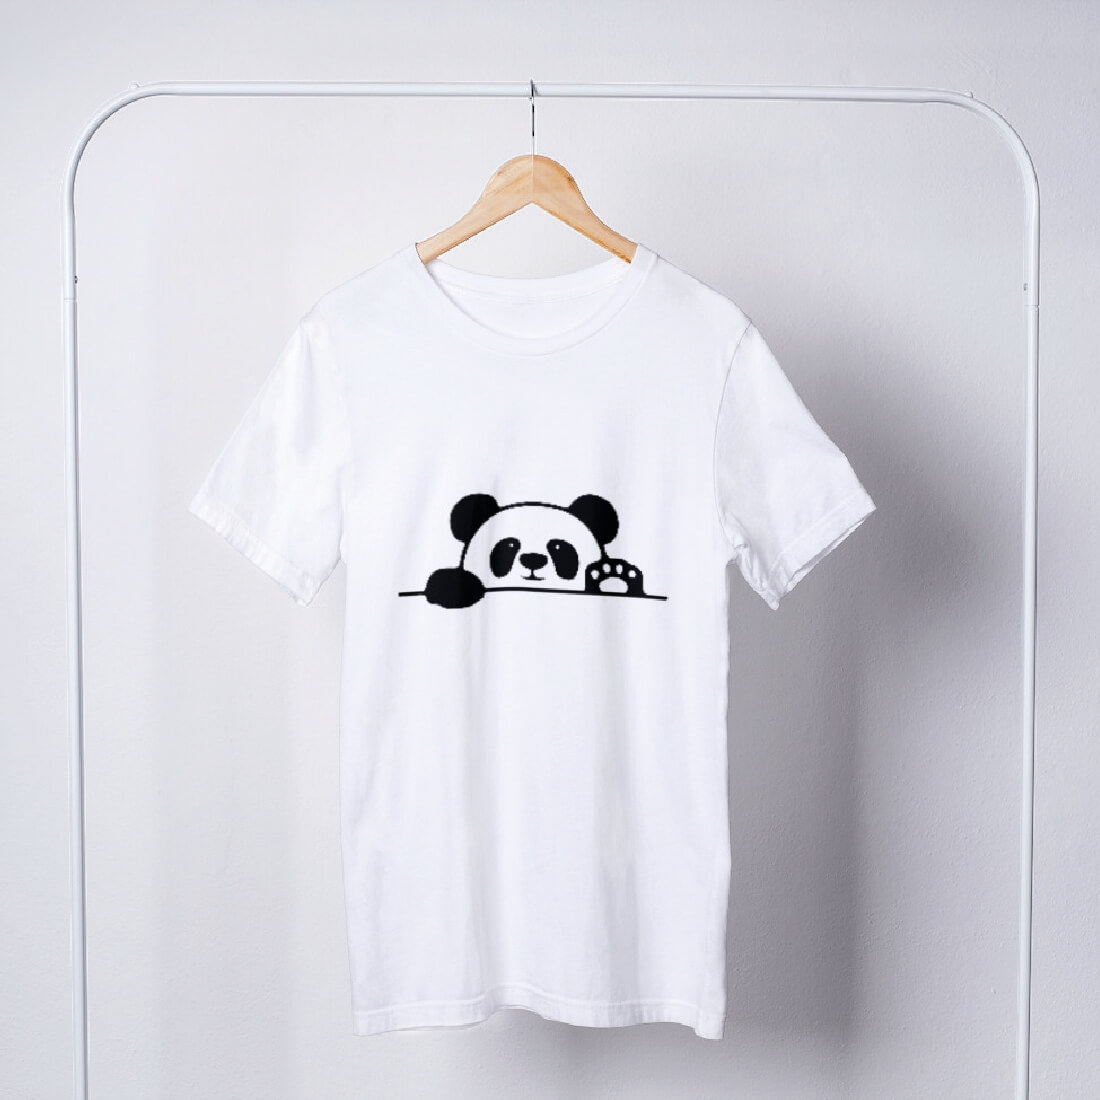 T-shirt Panda Design Graphics cover image.